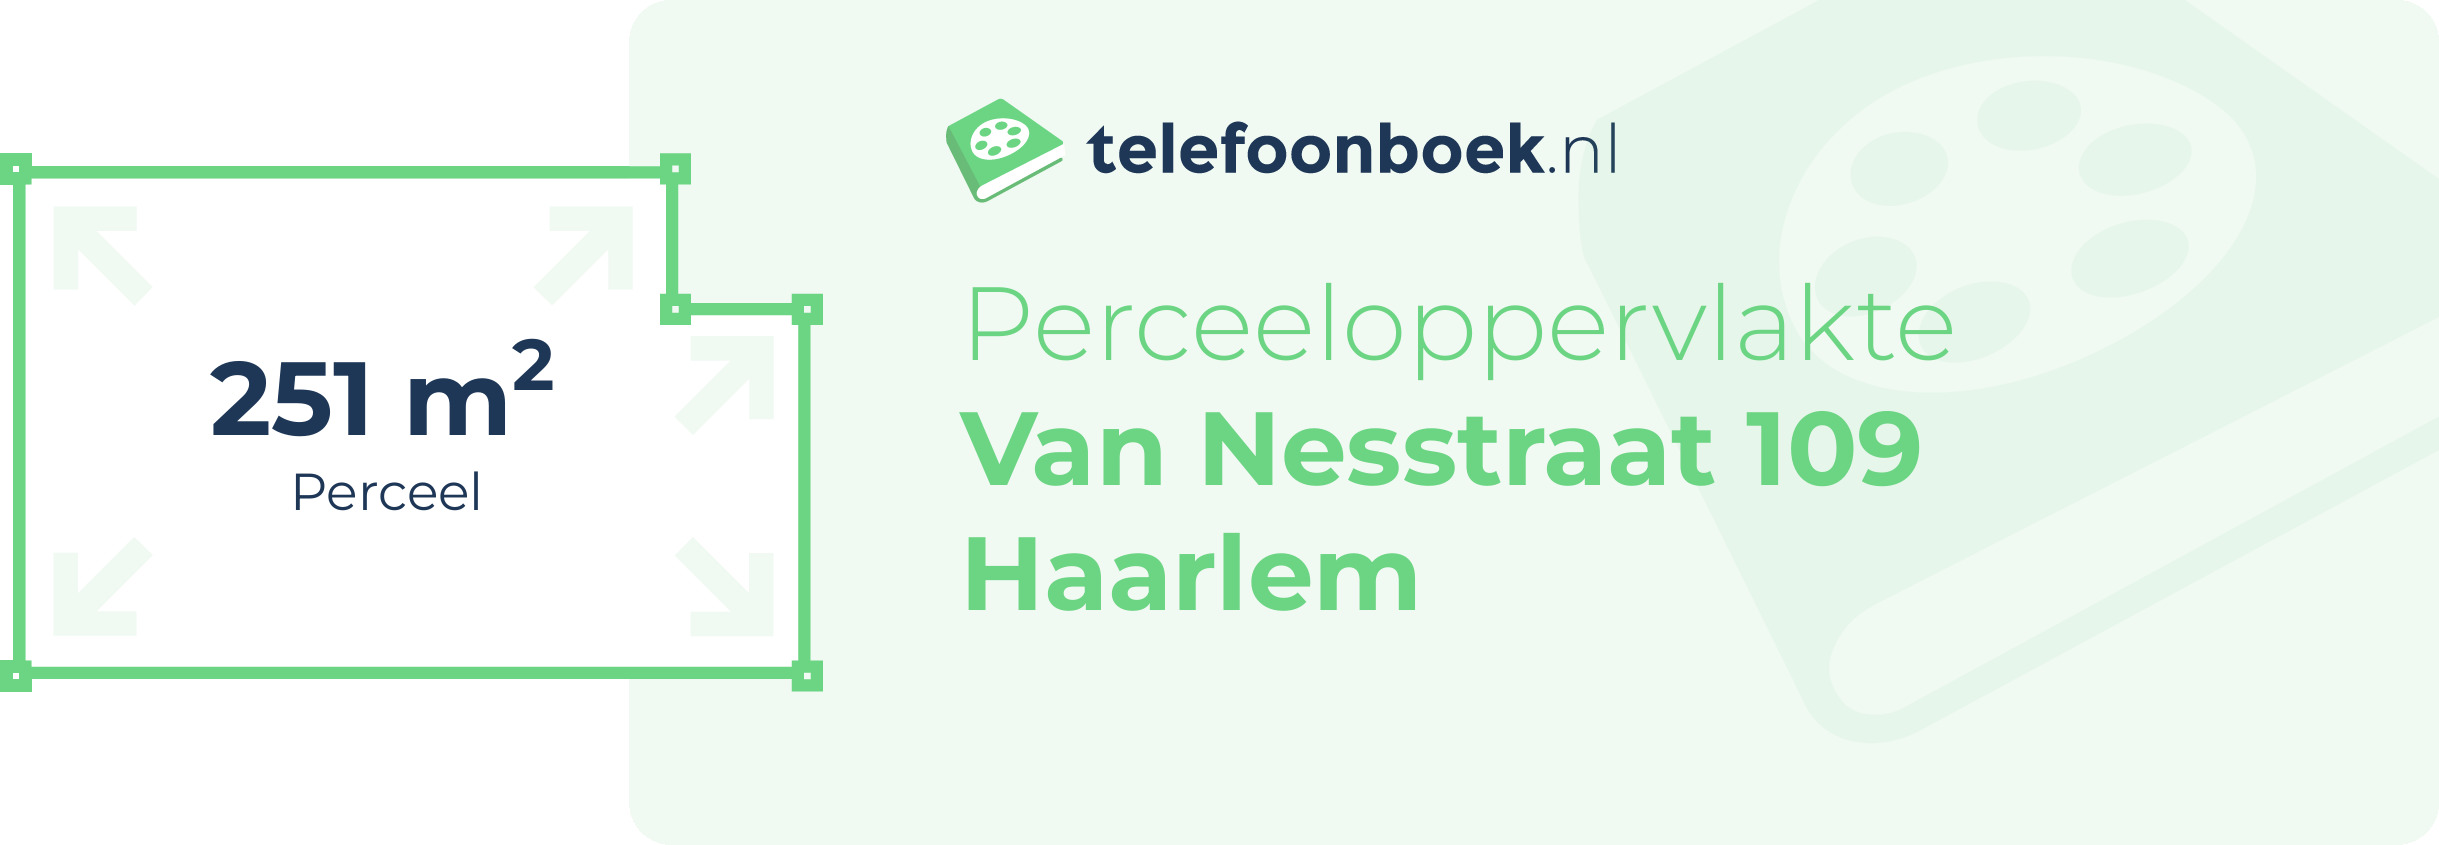 Perceeloppervlakte Van Nesstraat 109 Haarlem